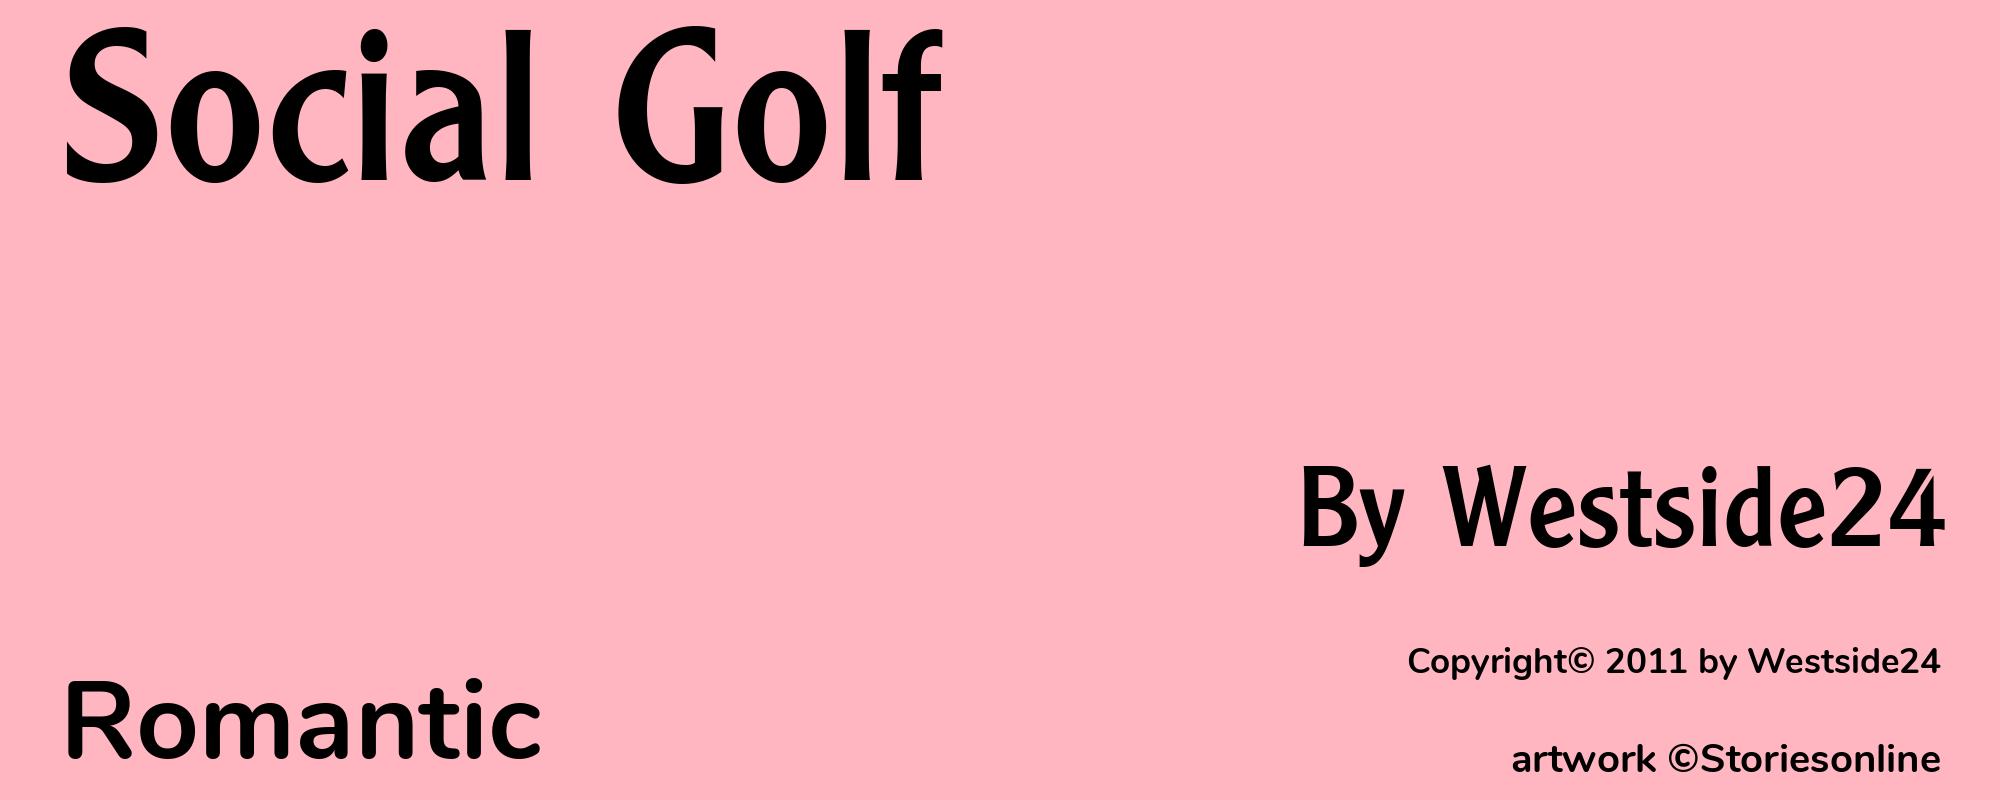 Social Golf - Cover